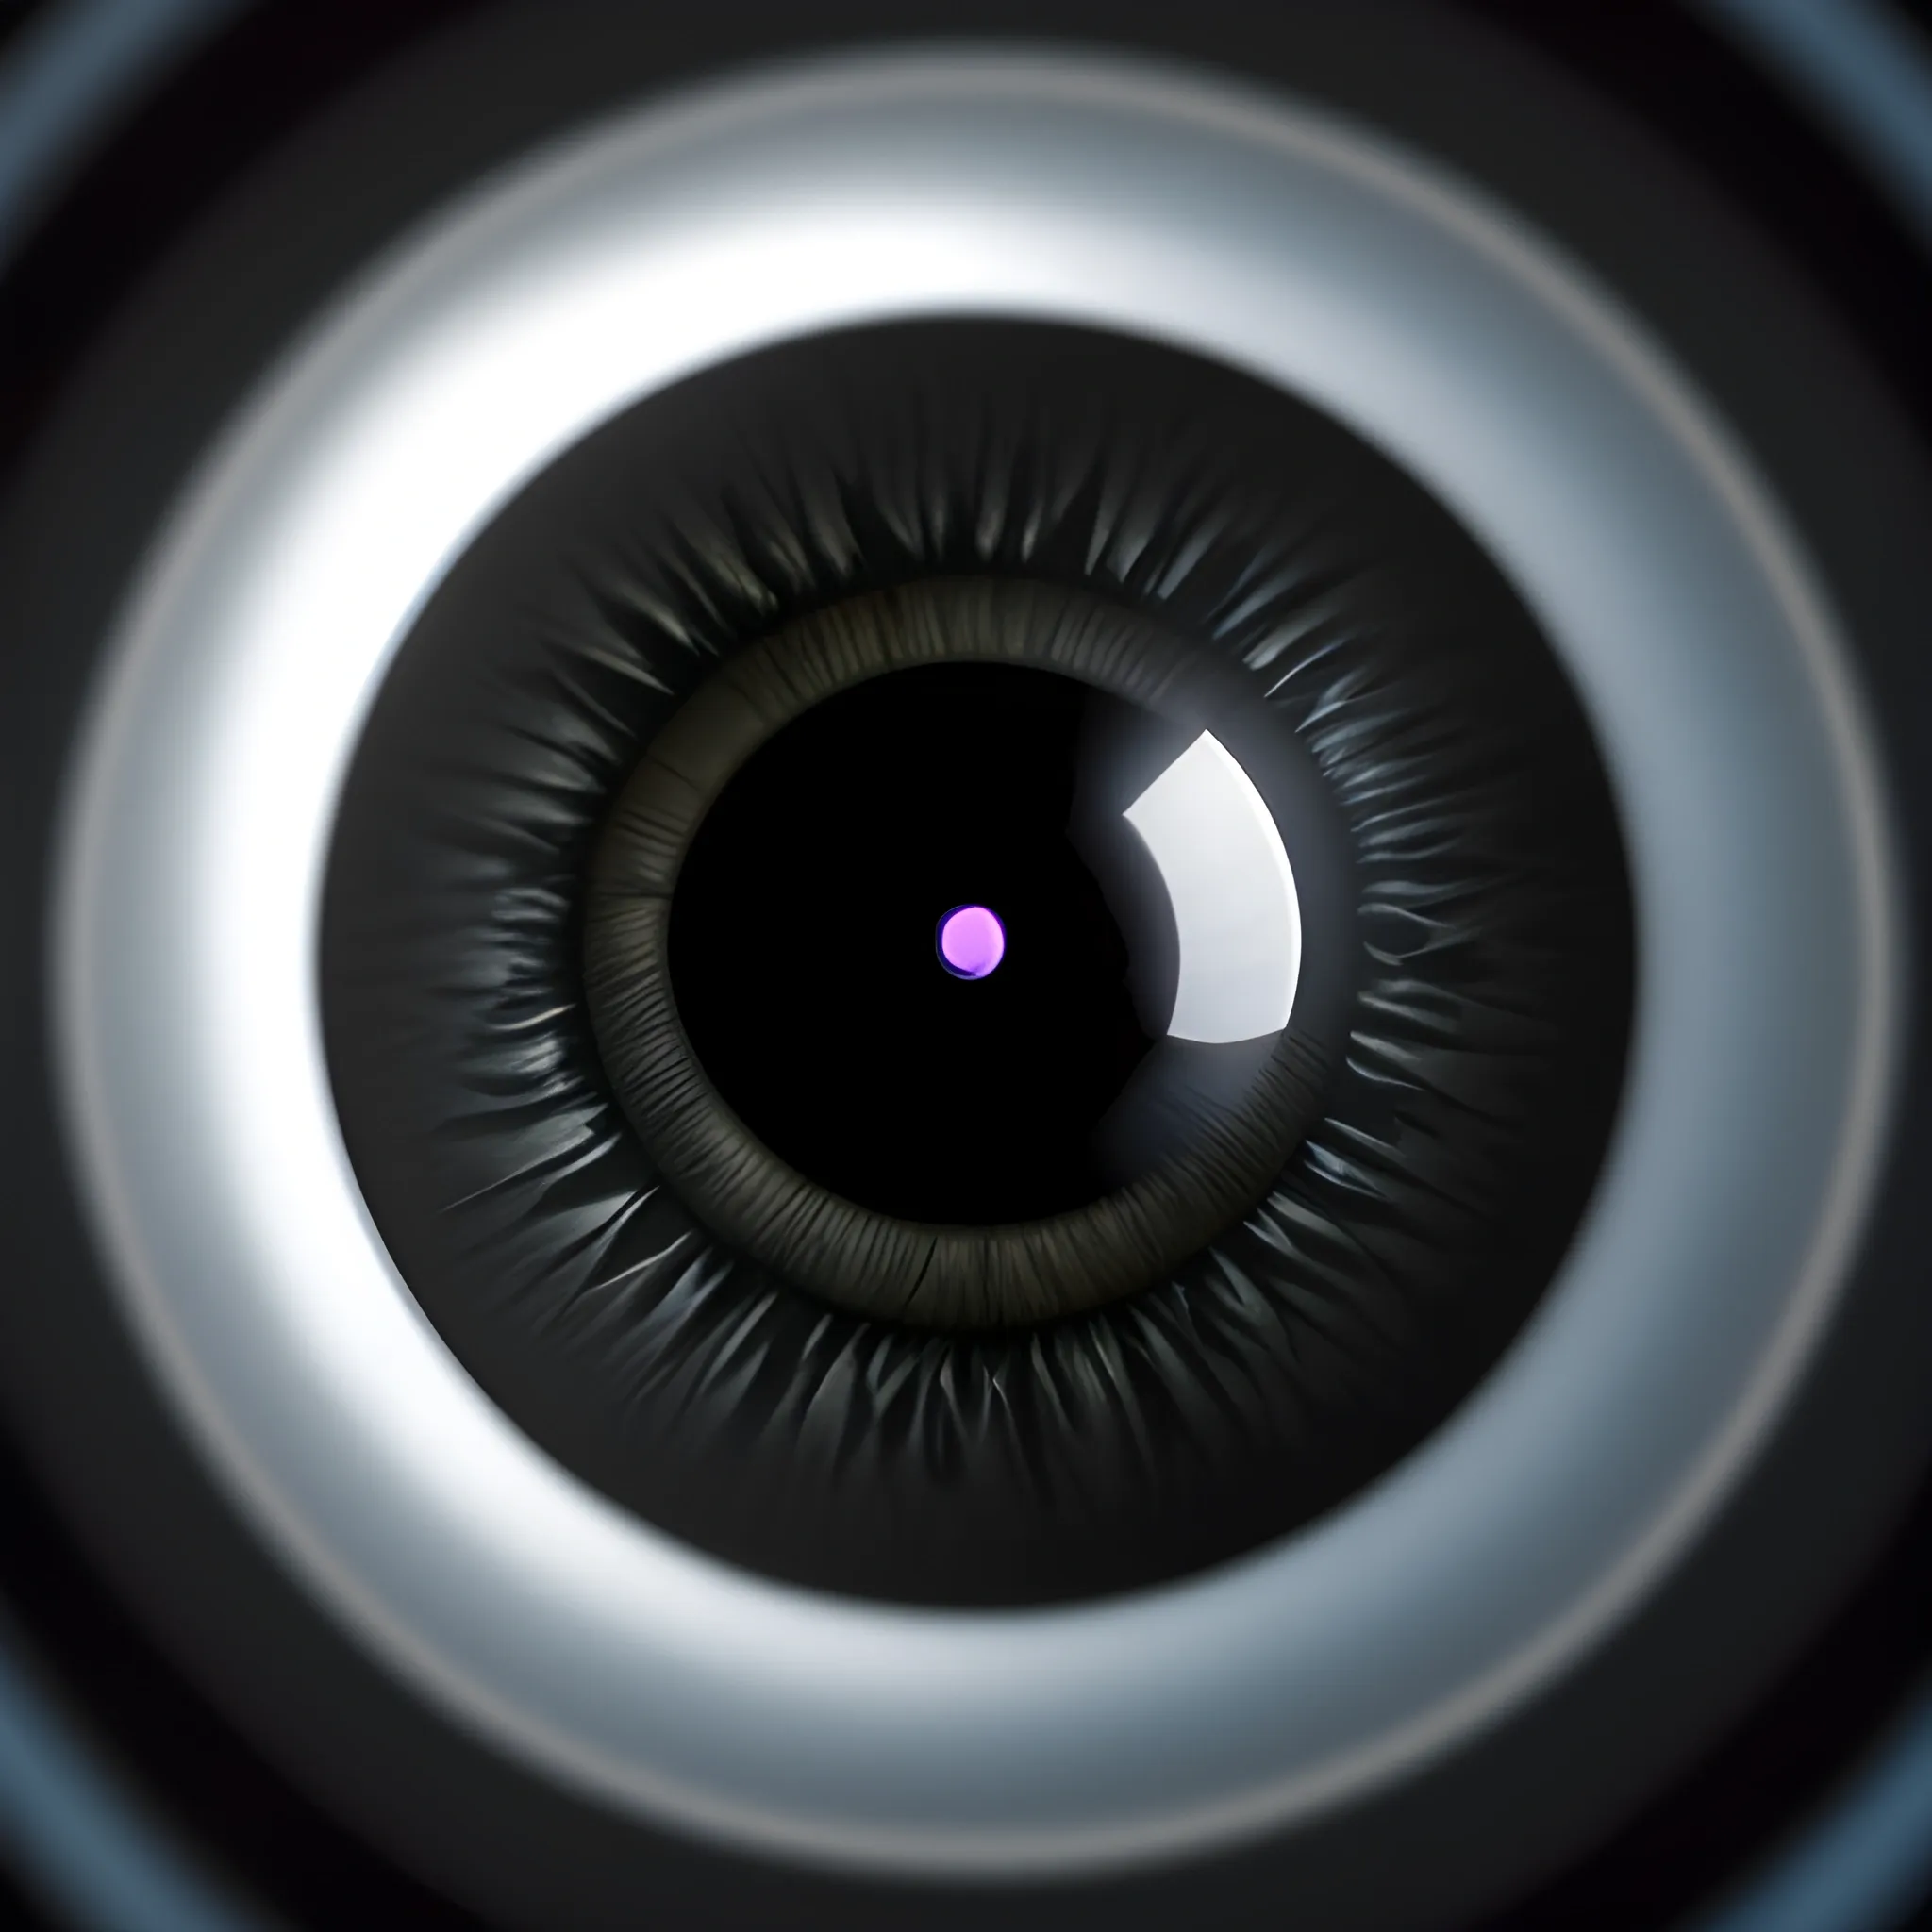 A high resolution, cinematic photo of a dark humanoid alien eye